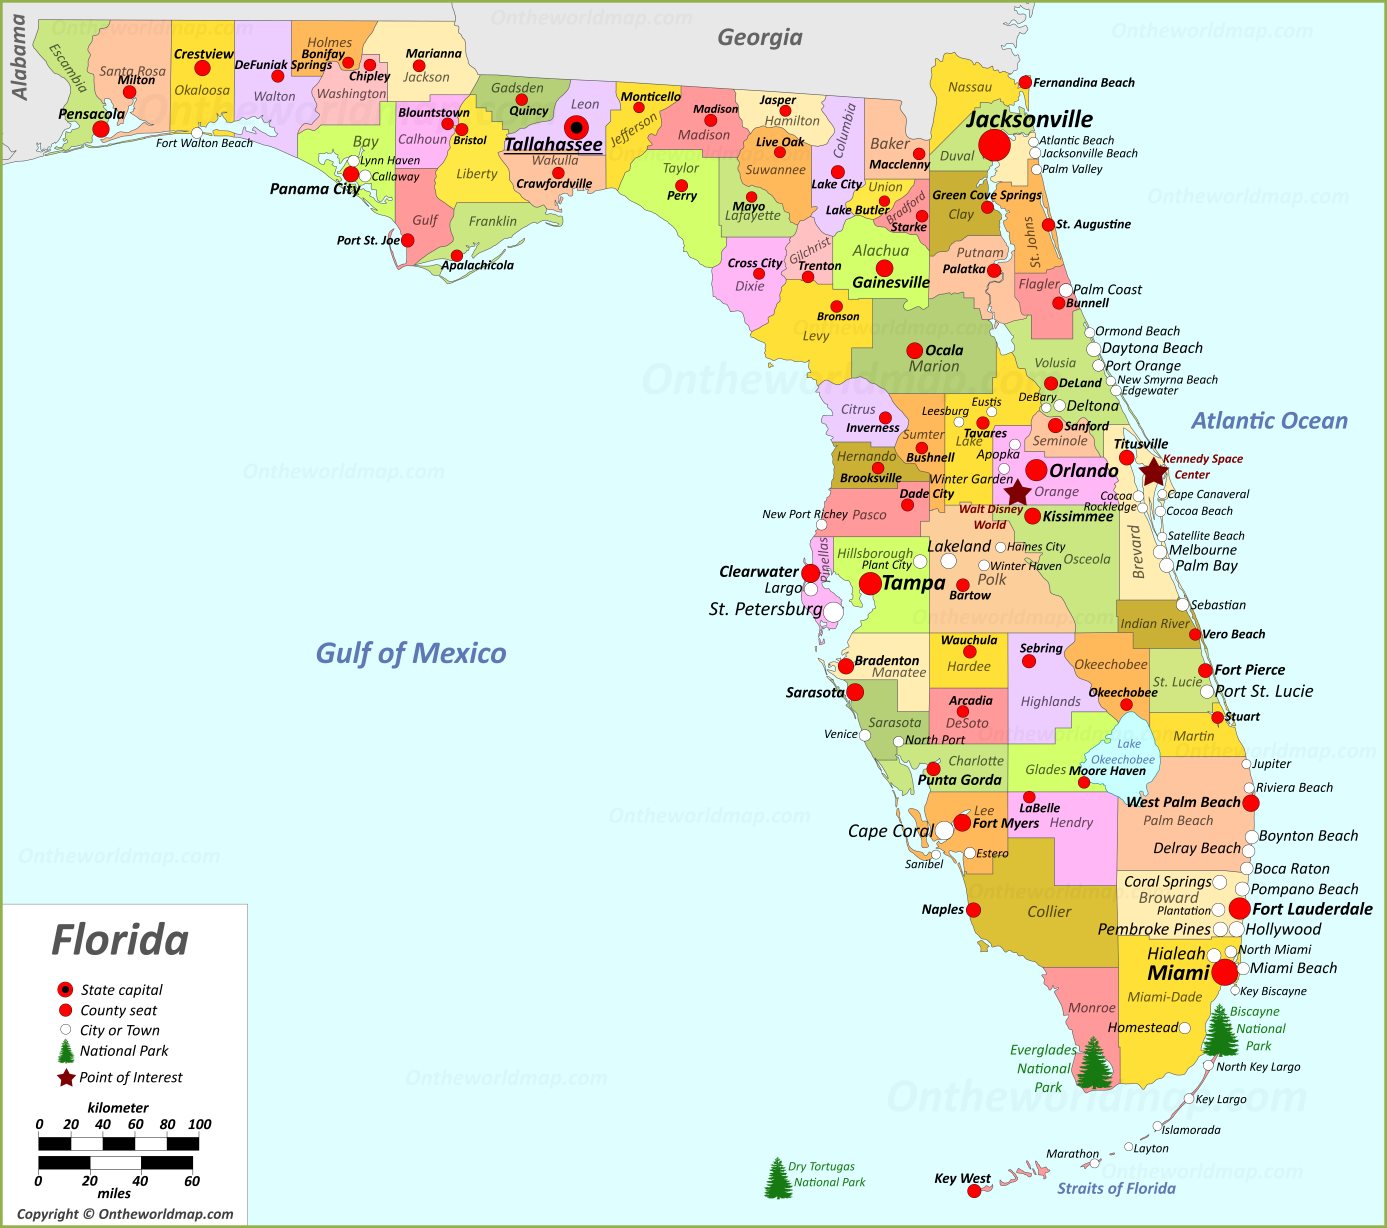 a map of Florida